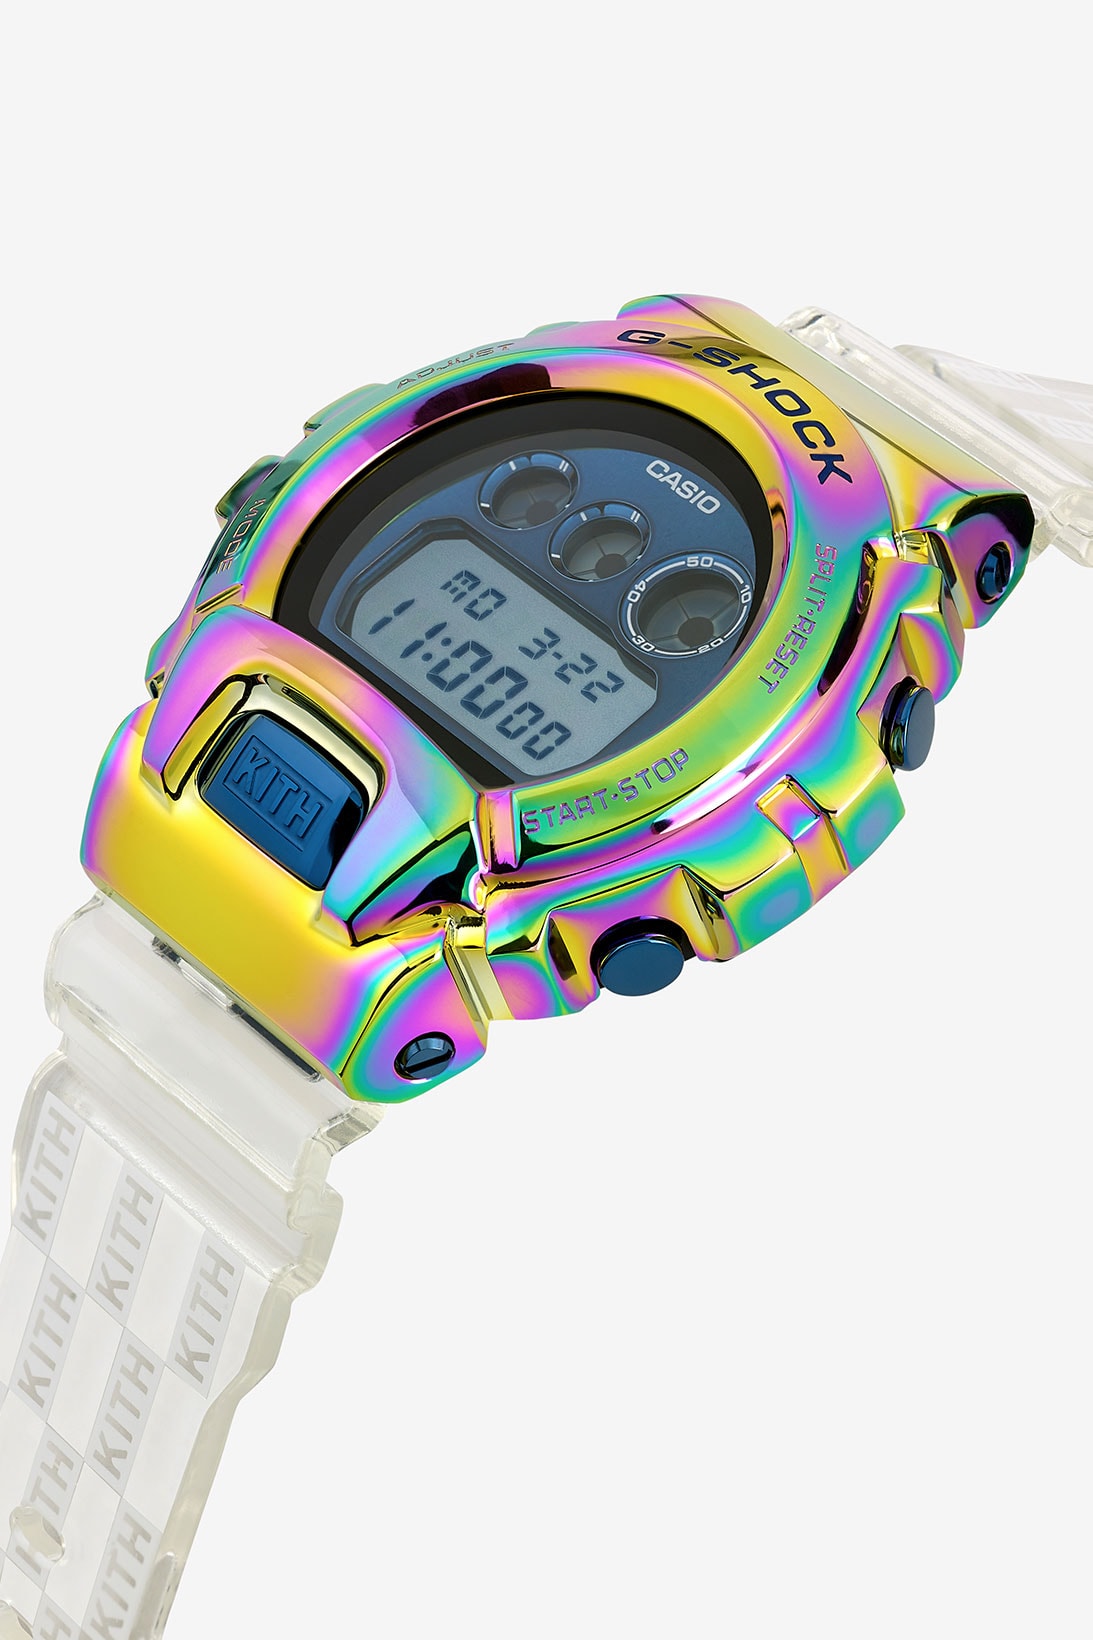 kith g-shock gm-6900 rainbow watches collaboration logo strap translucent case digital